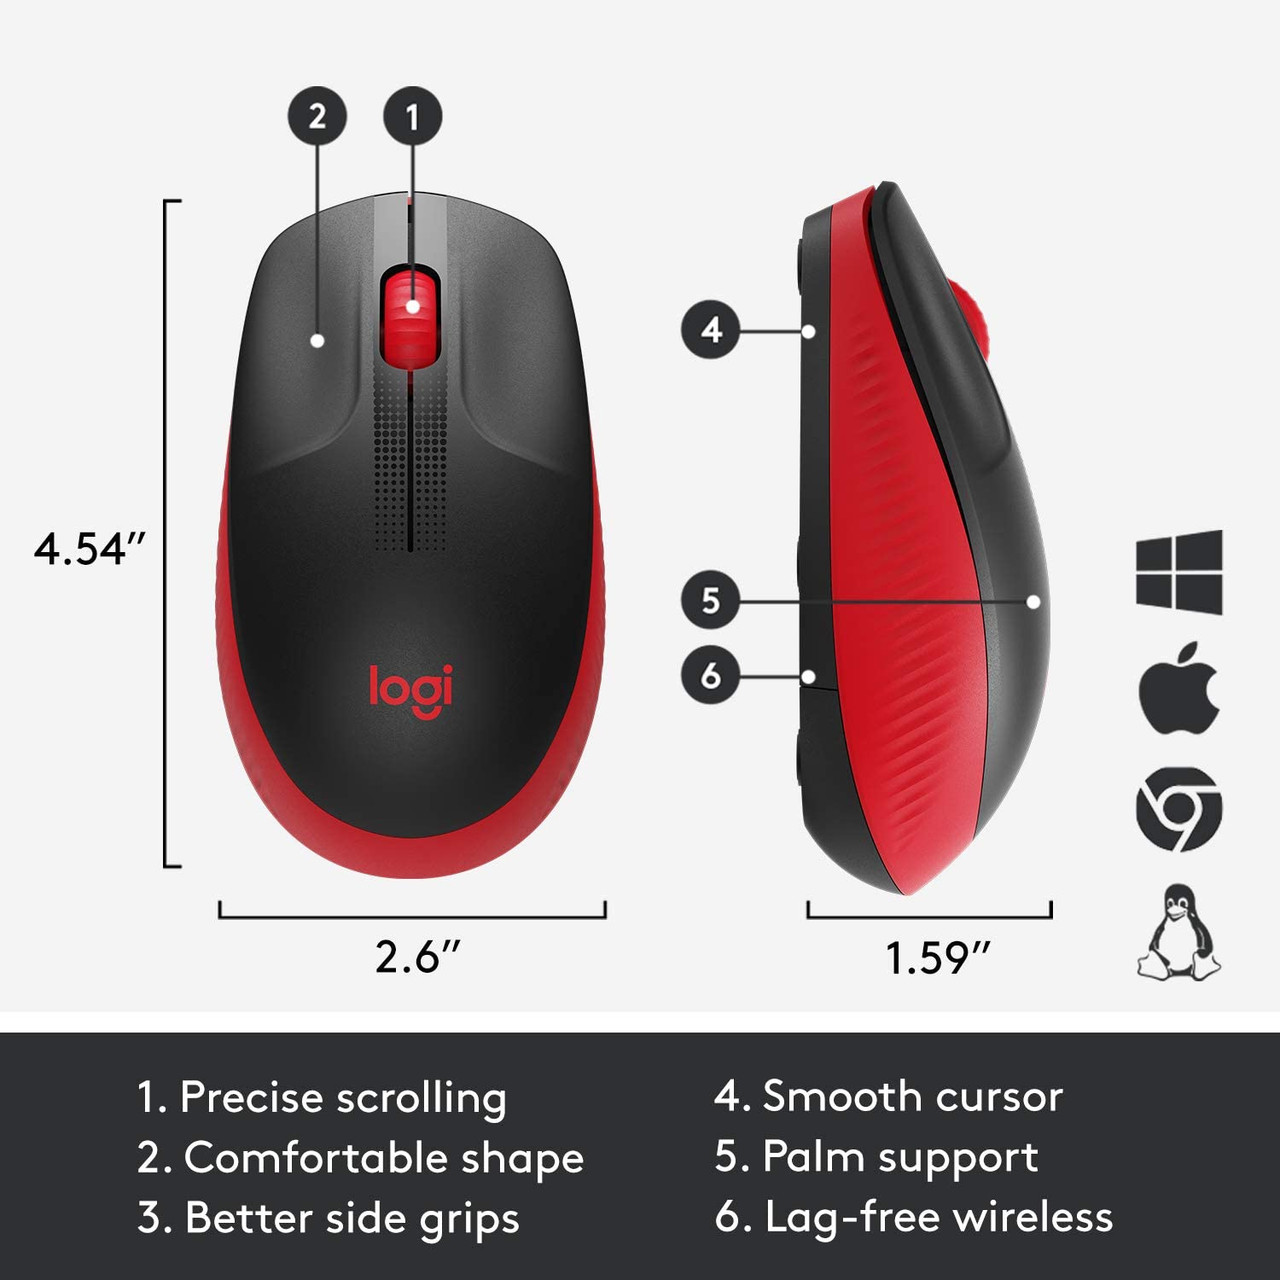 Logitech Wireless Mouse M190, Full Size Ambidextrous Curve Design